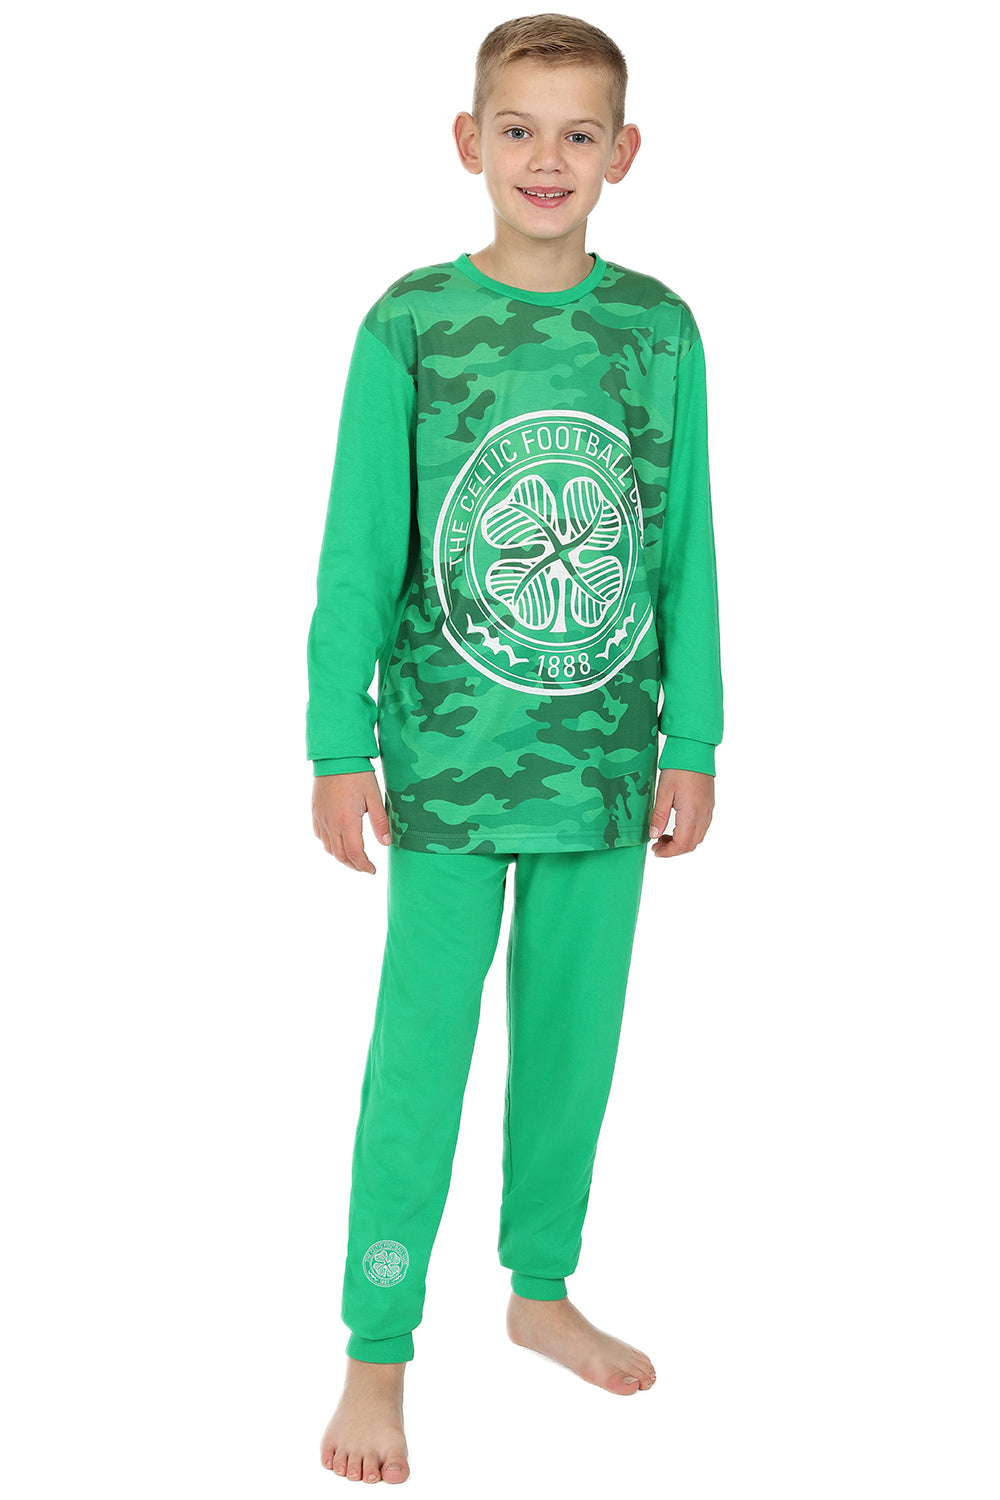 Boys Celtic FC Green Camouflage Long Pyjamas